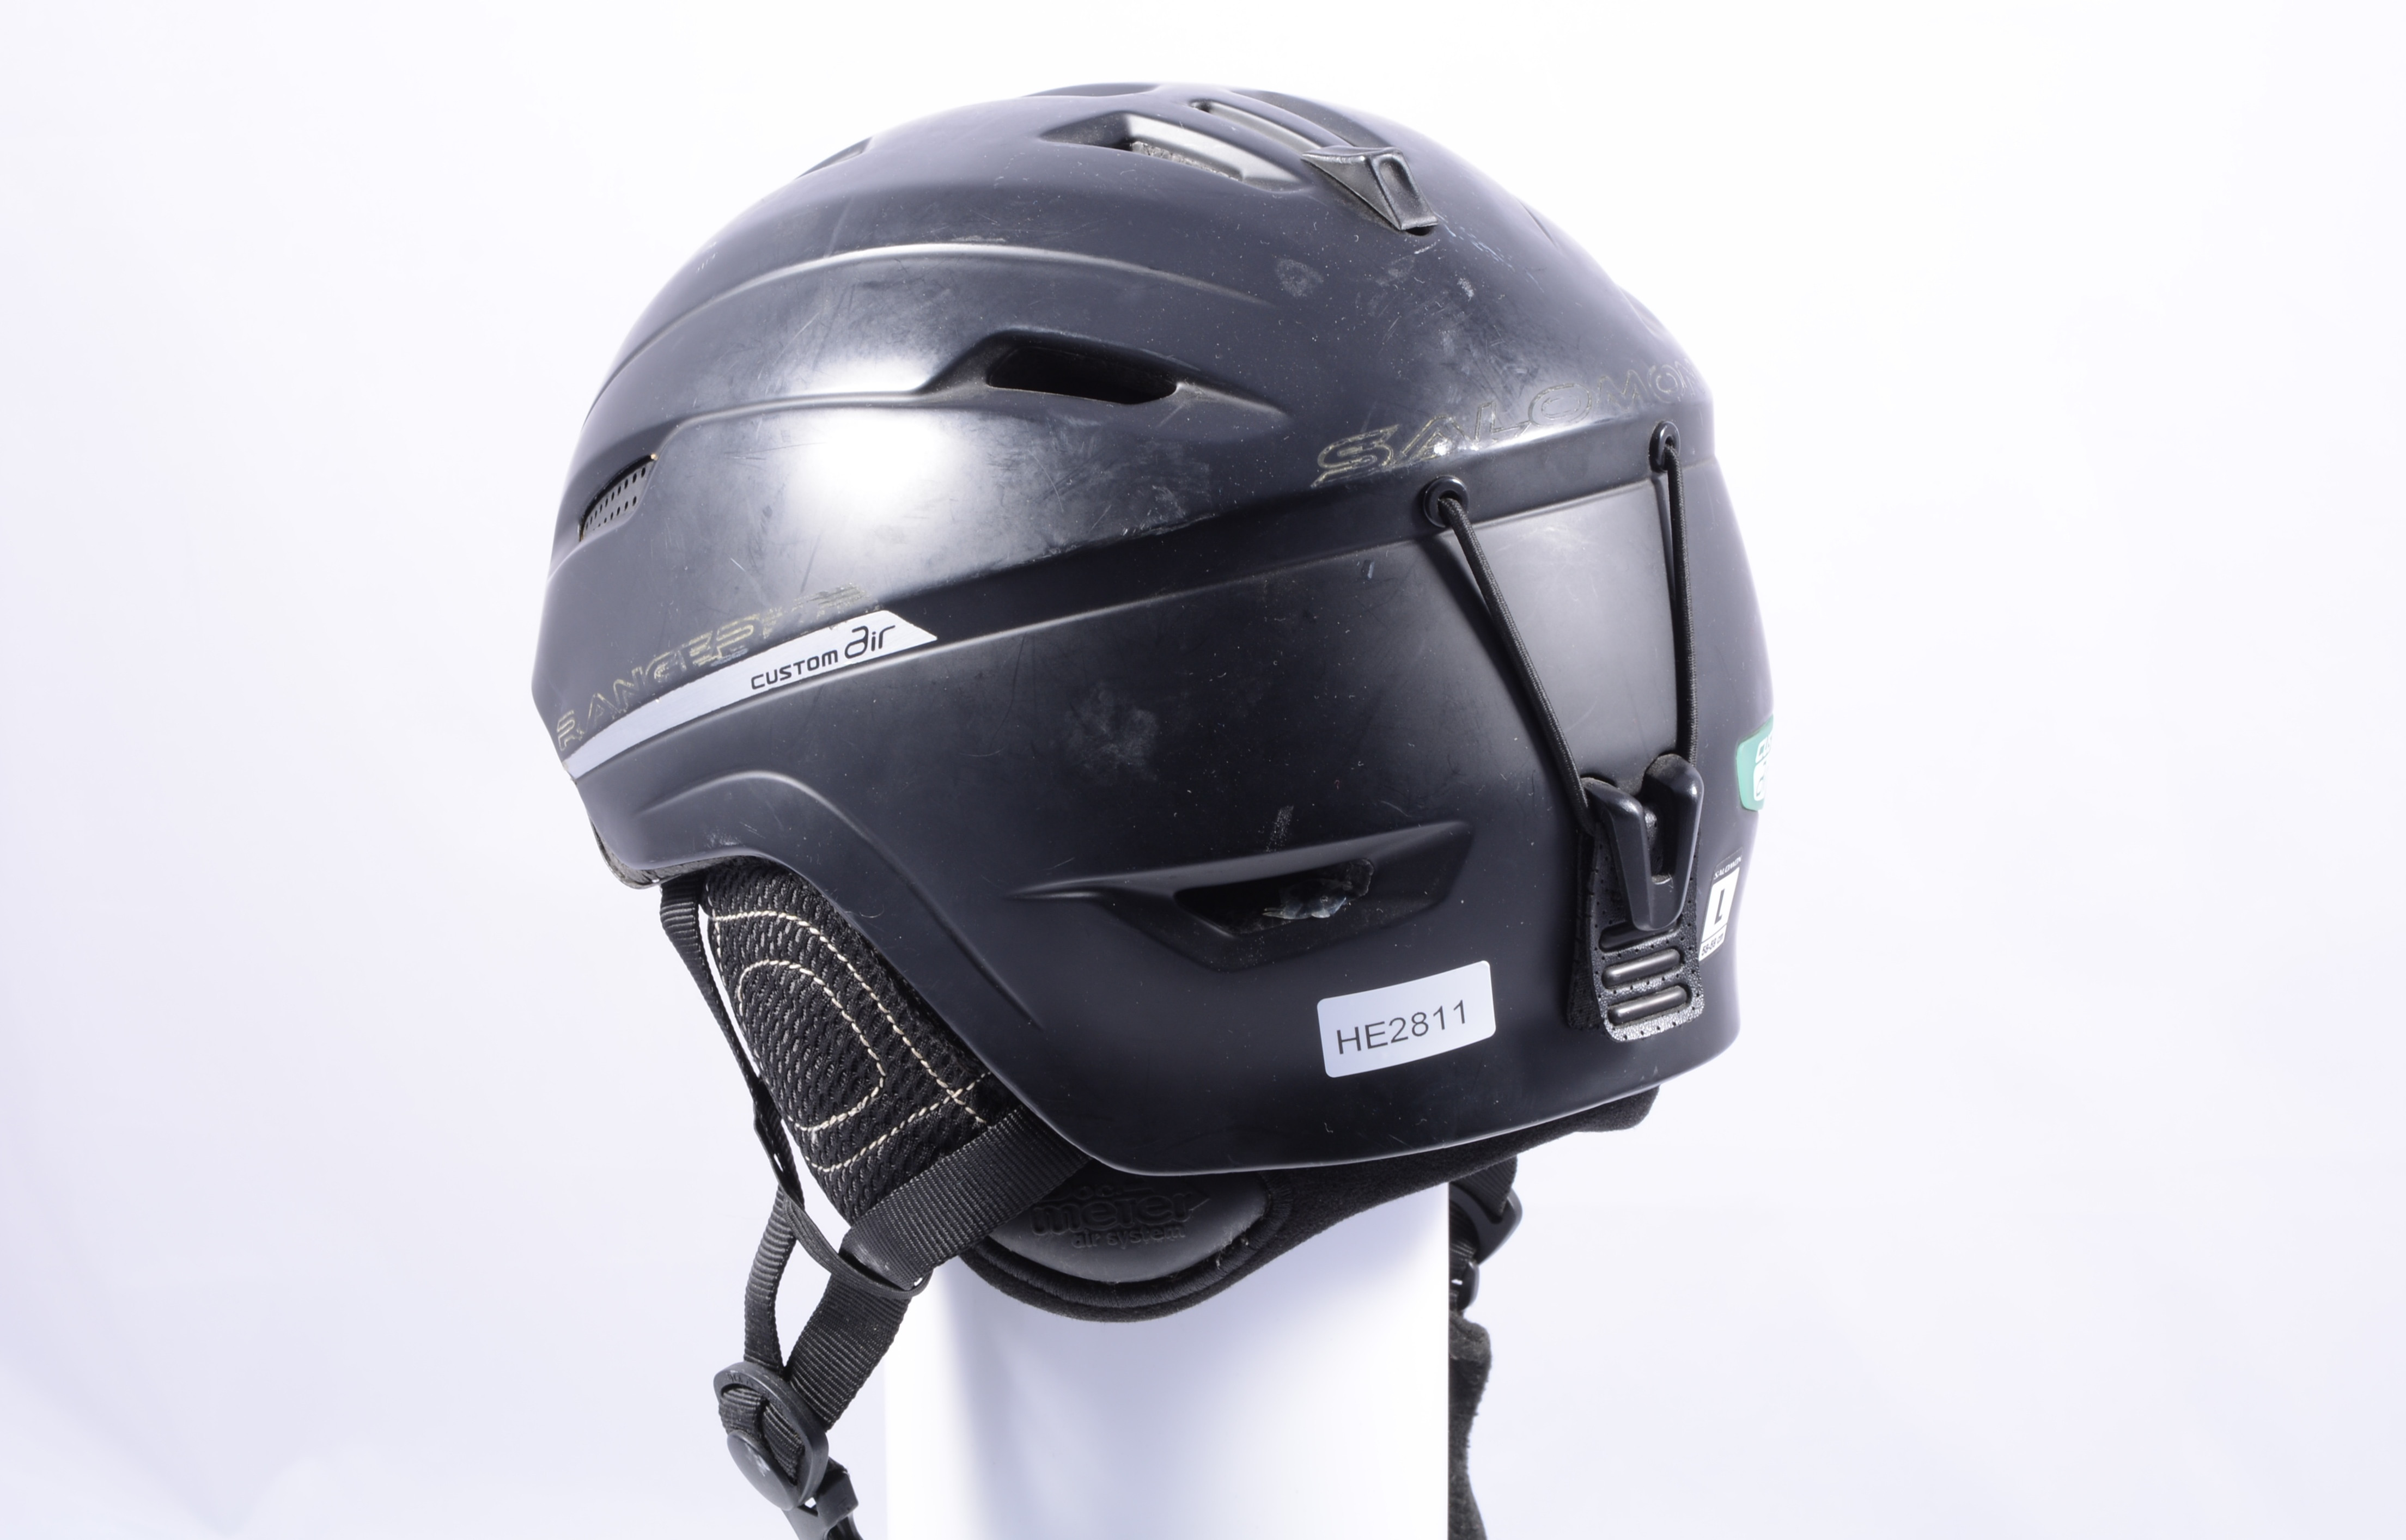 Virus vallei bemanning ski/snowboard helmet SALOMON RANGER Custom Air, black, Air ventilation -  Mardosport.com